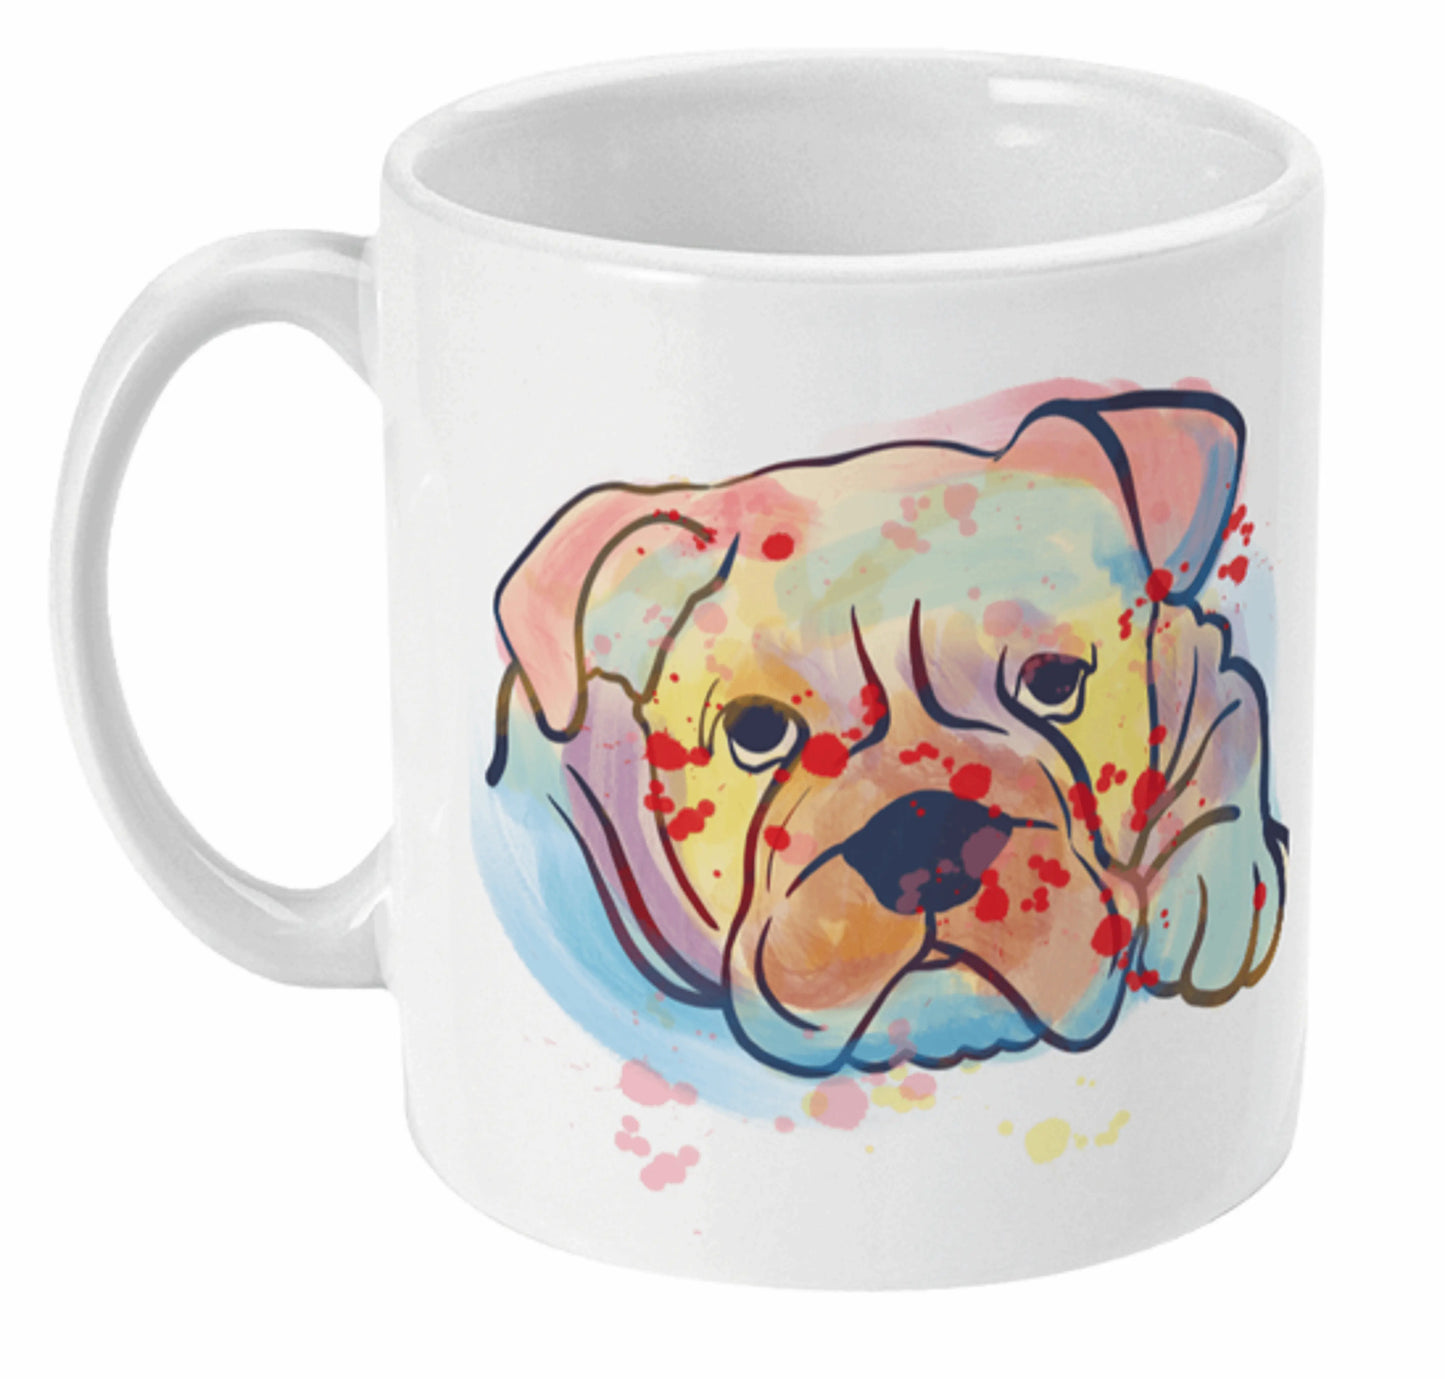  American Bulldog Watercolour Print Mug by Free Spirit Accessories sold by Free Spirit Accessories